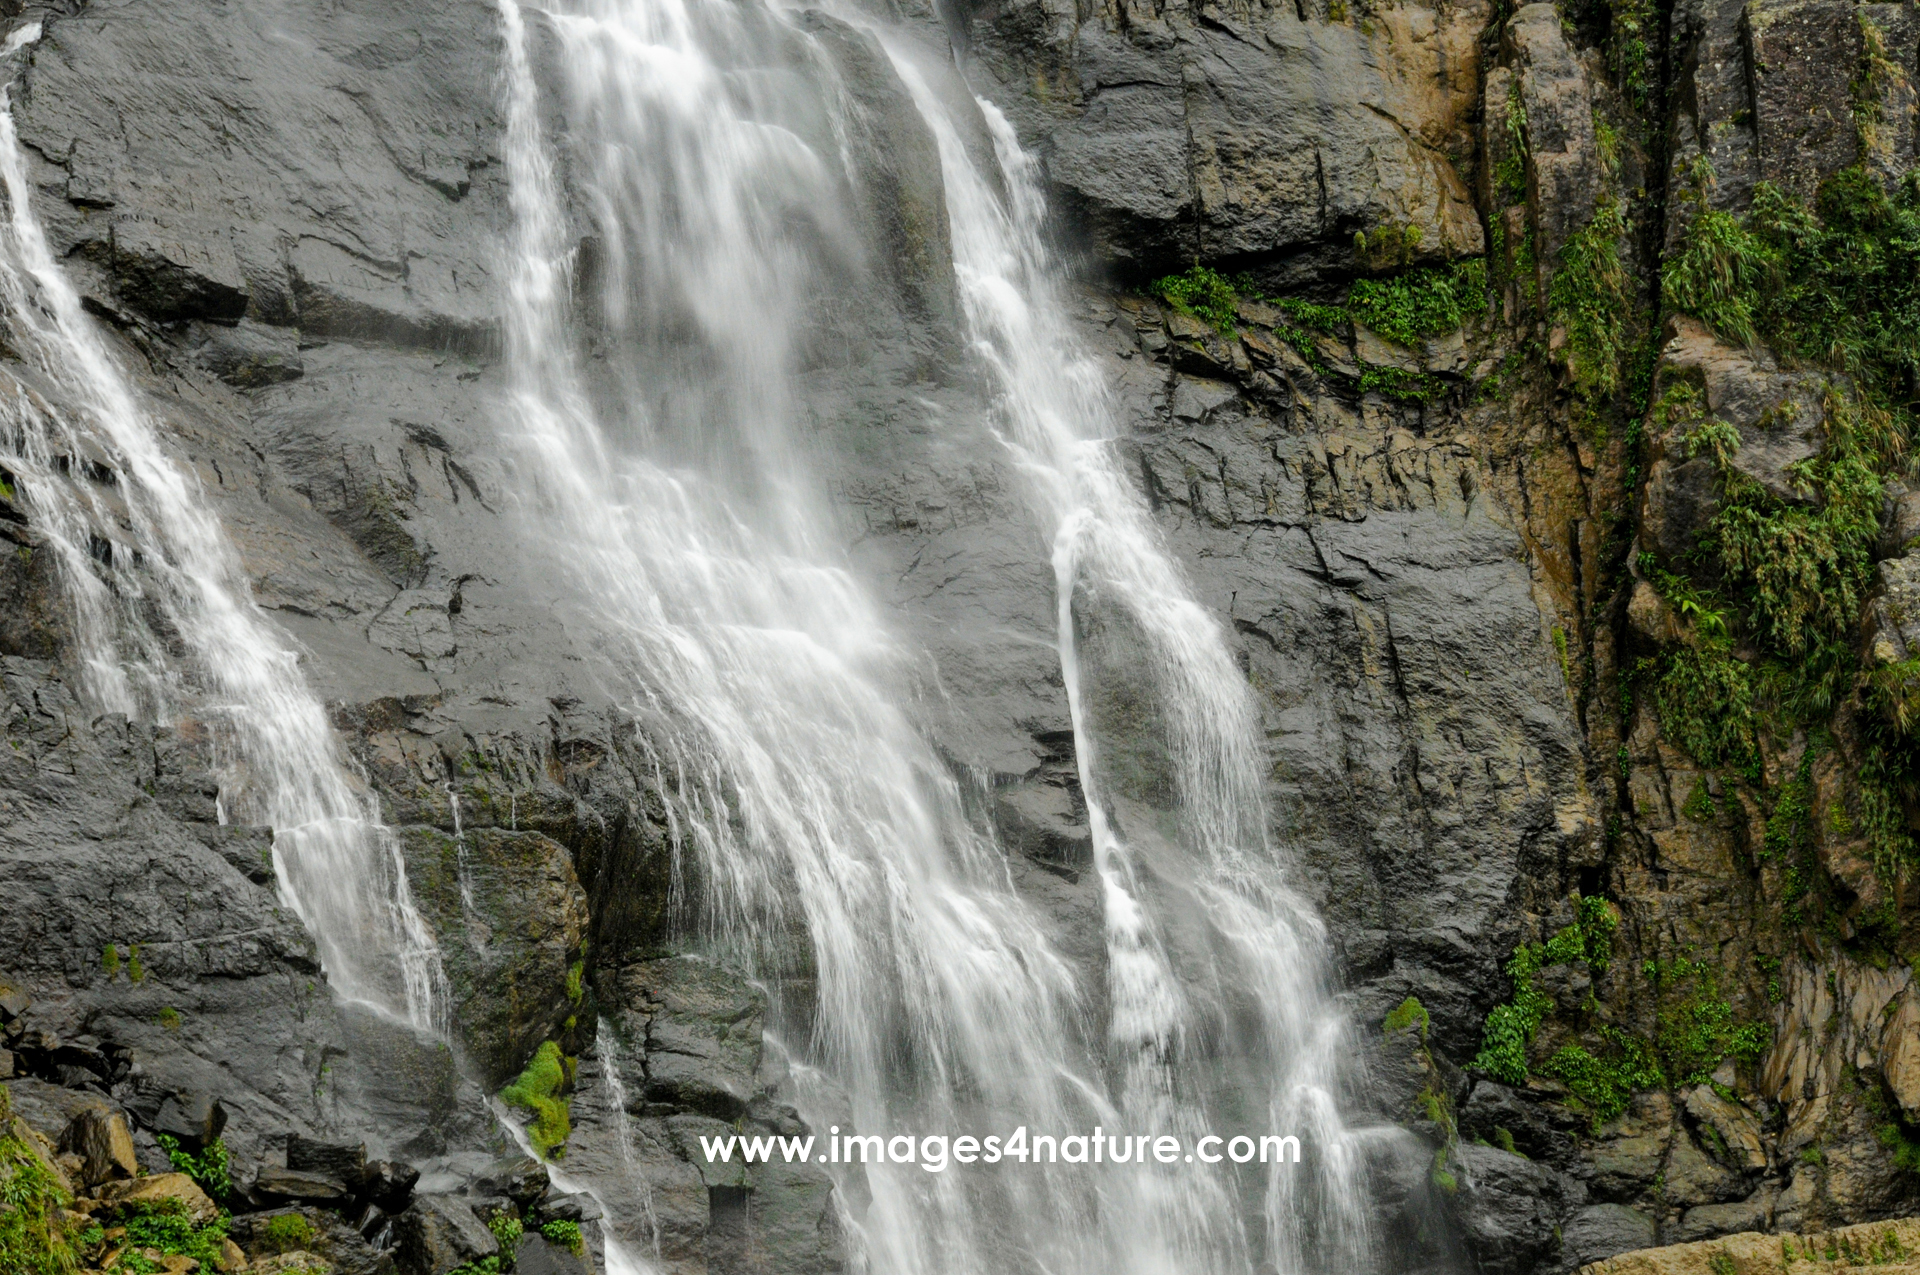 Flowing waterfall on a dark grey rock face